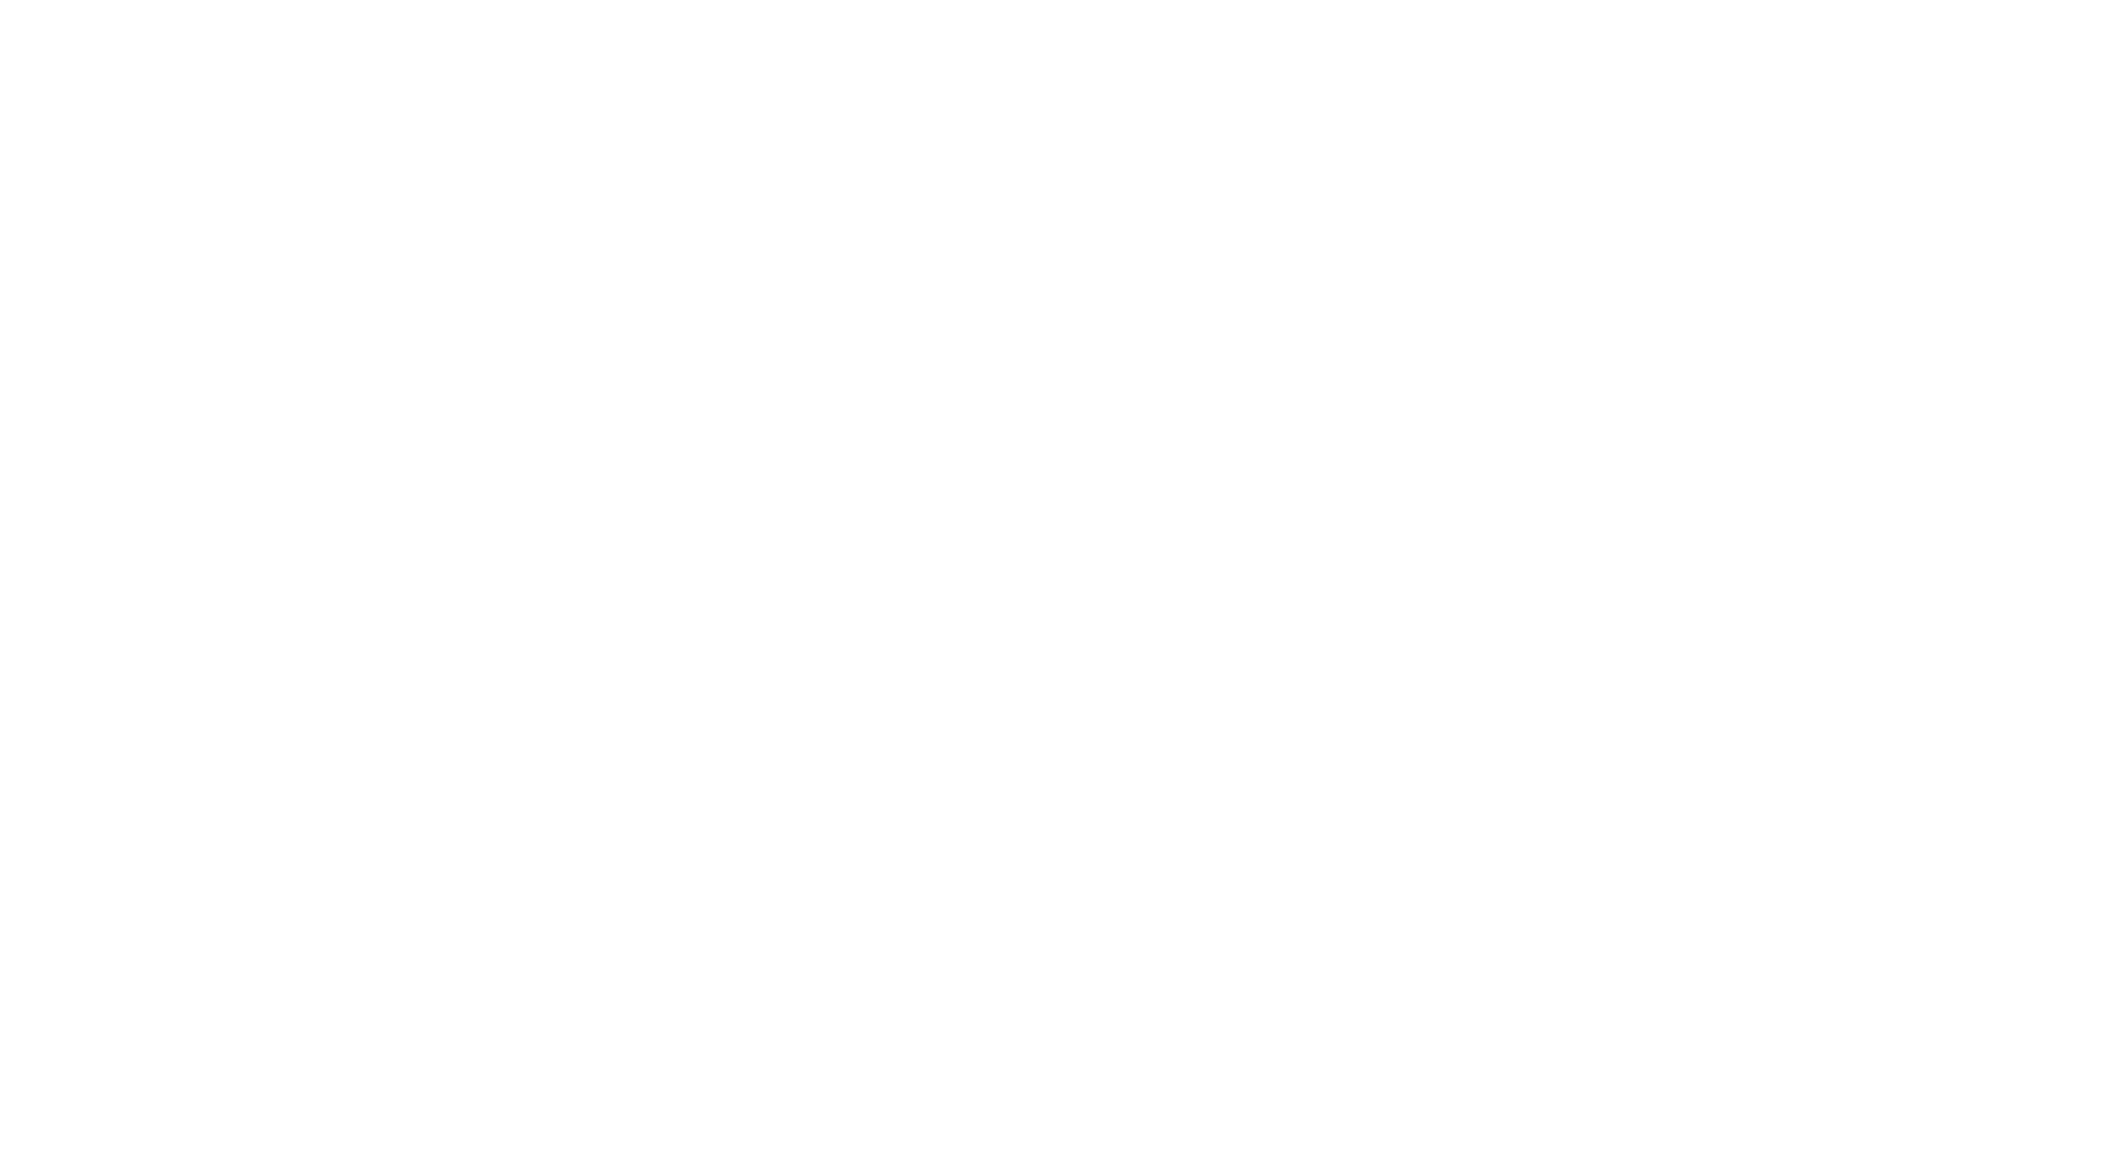 Paleontological Society logo white on transparent